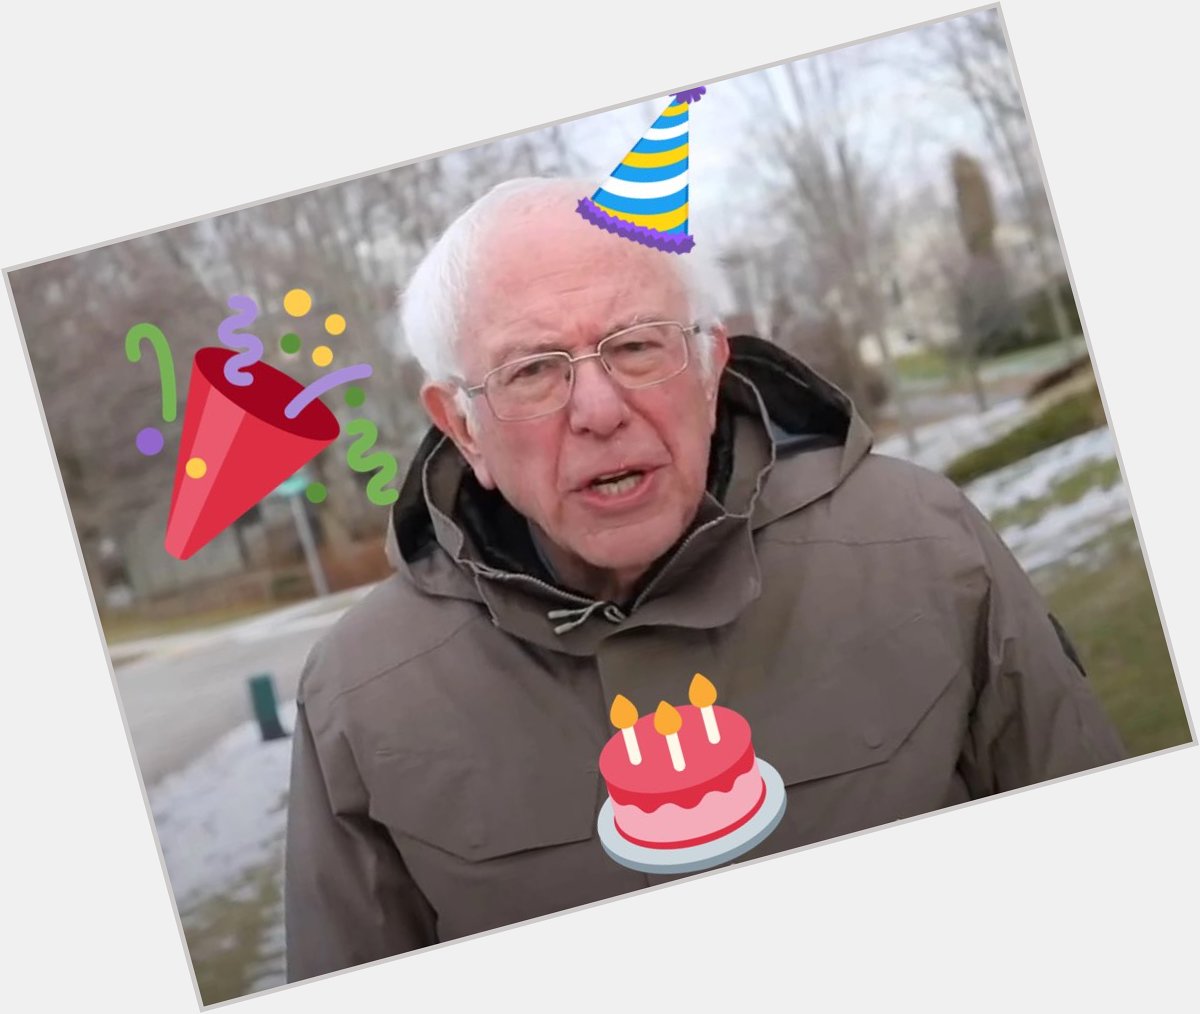 I am once again wishing Bernie Sanders a Happy Birthday 